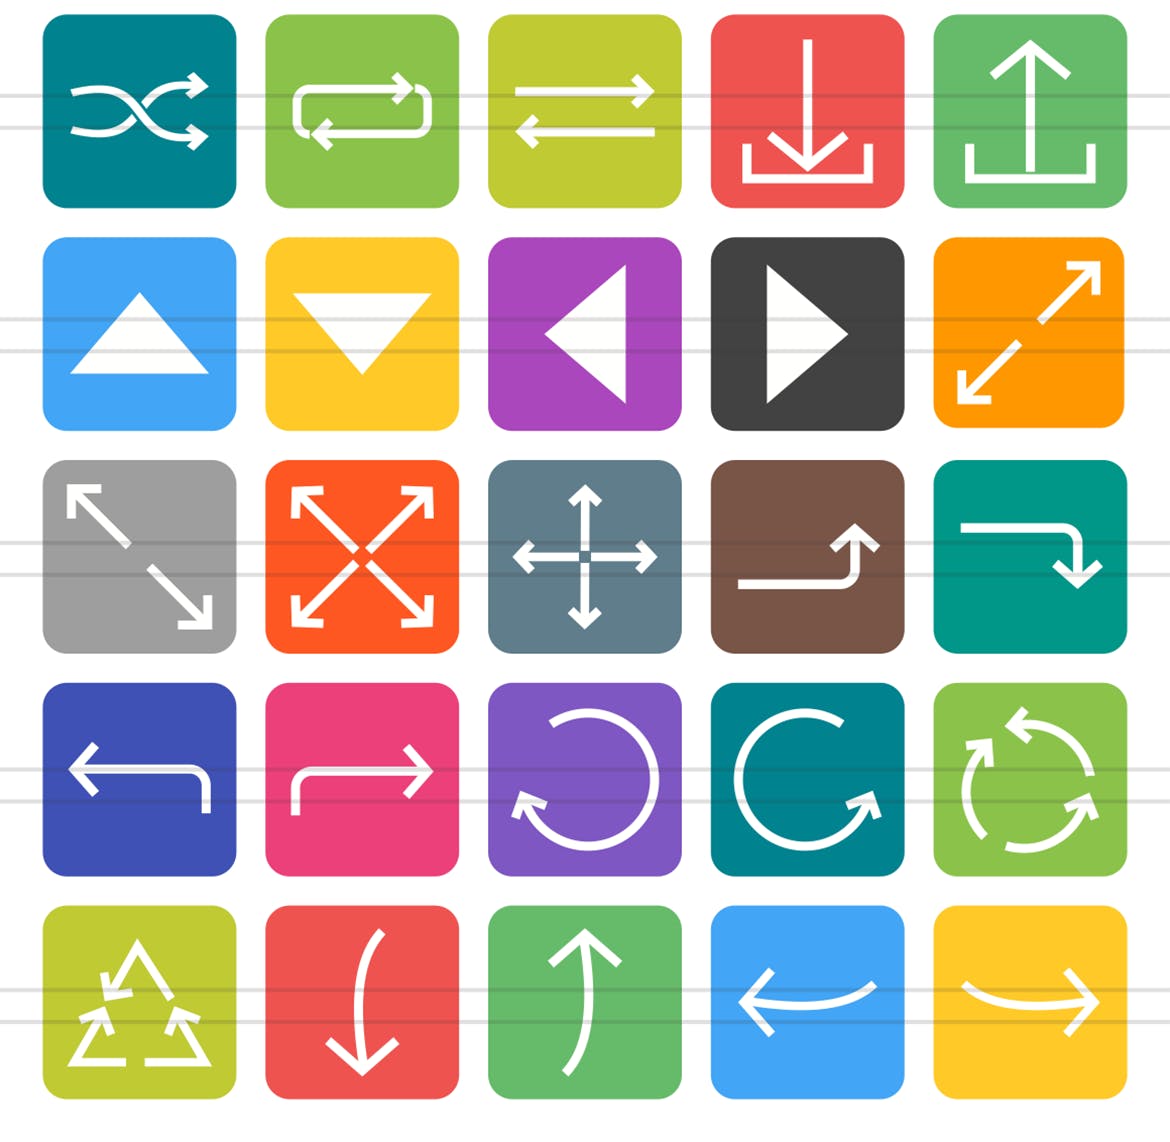 50枚箭头圆角图标素材 50 Arrows Flat Round Corner Icons插图(2)